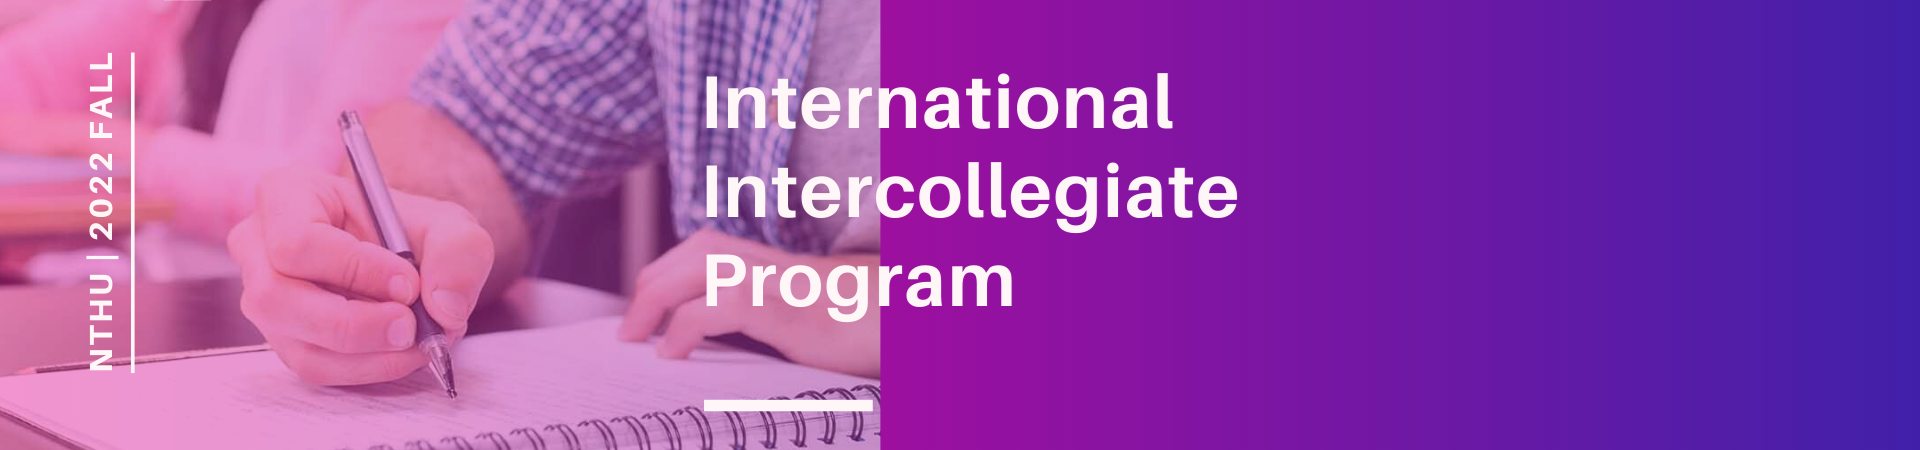 International Intercollegiate Program